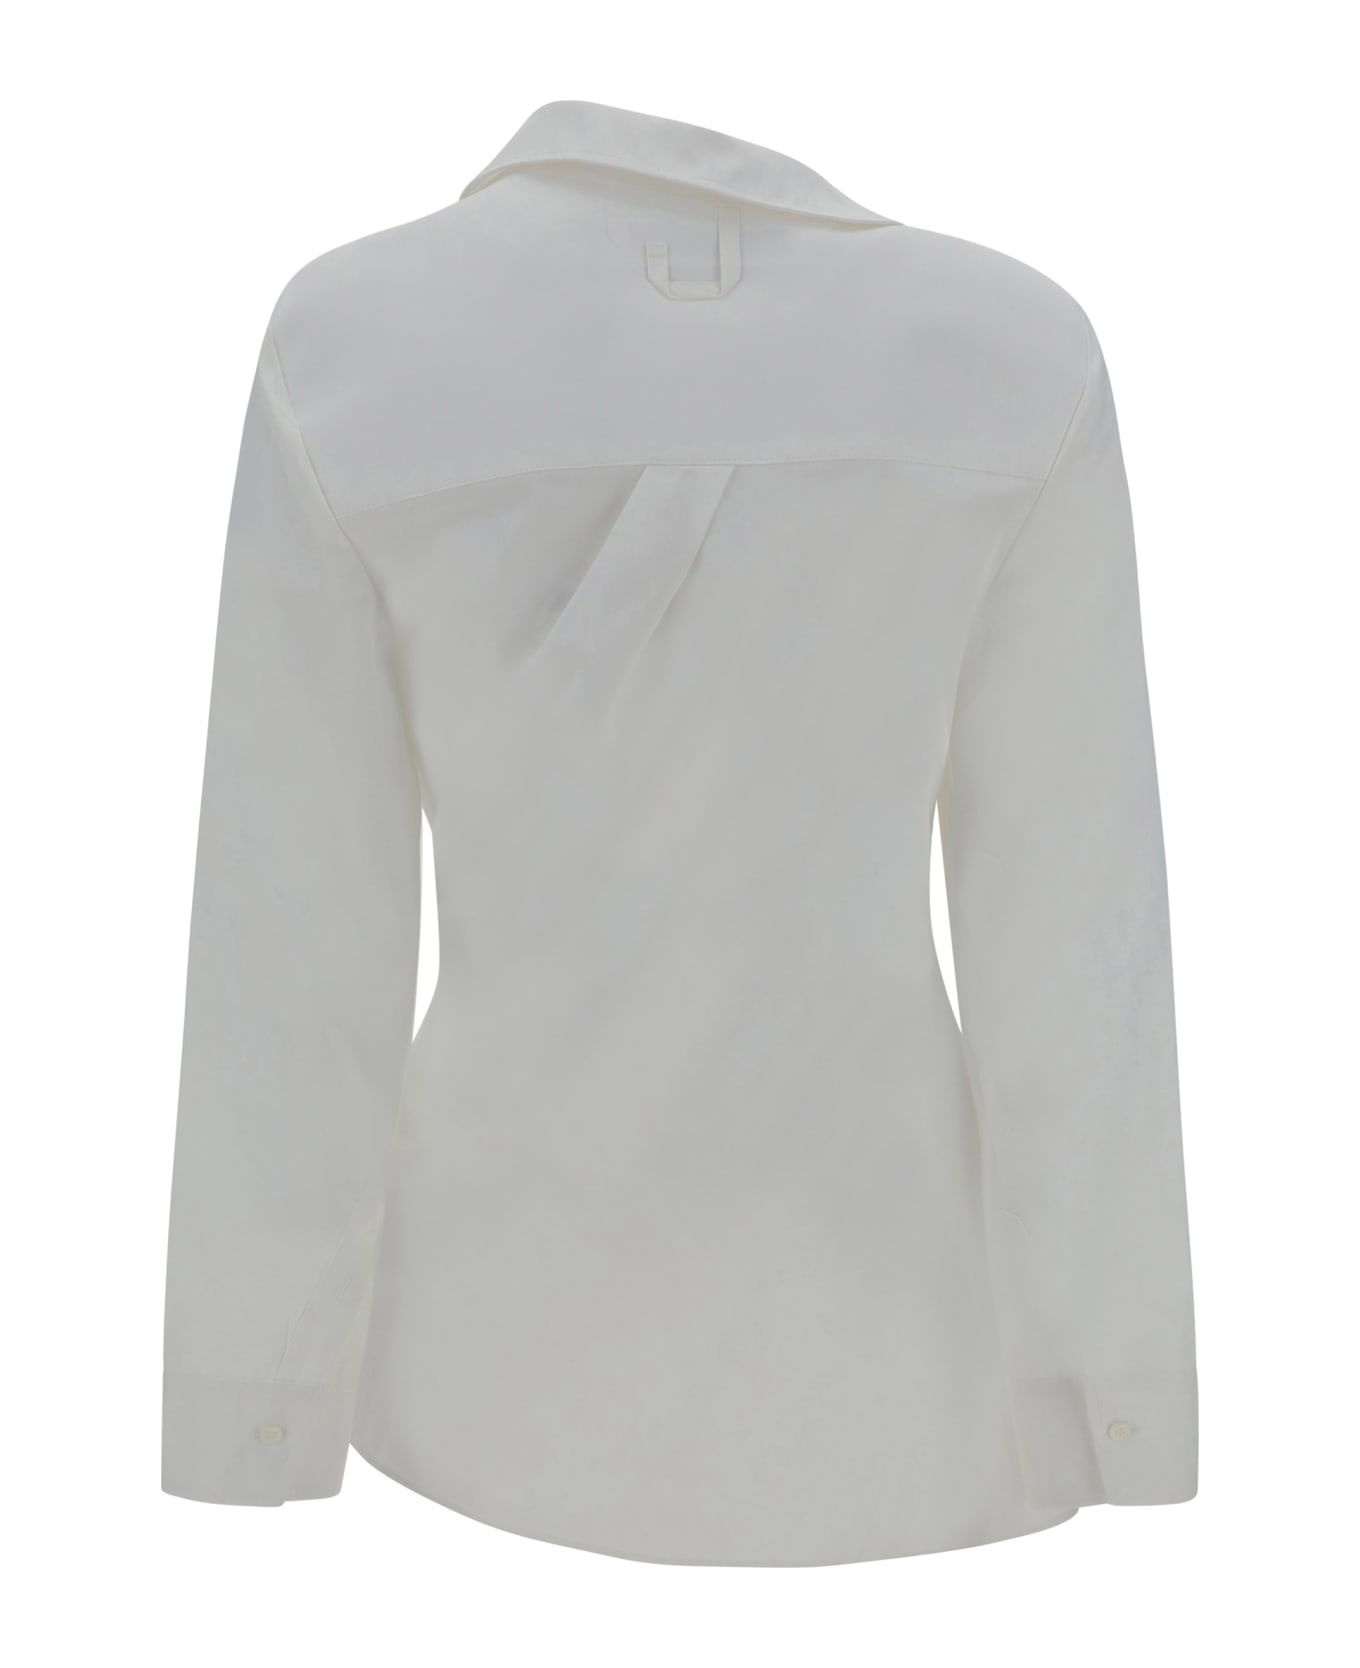 Jacquemus La Chemise Pablo Shirt - White シャツ